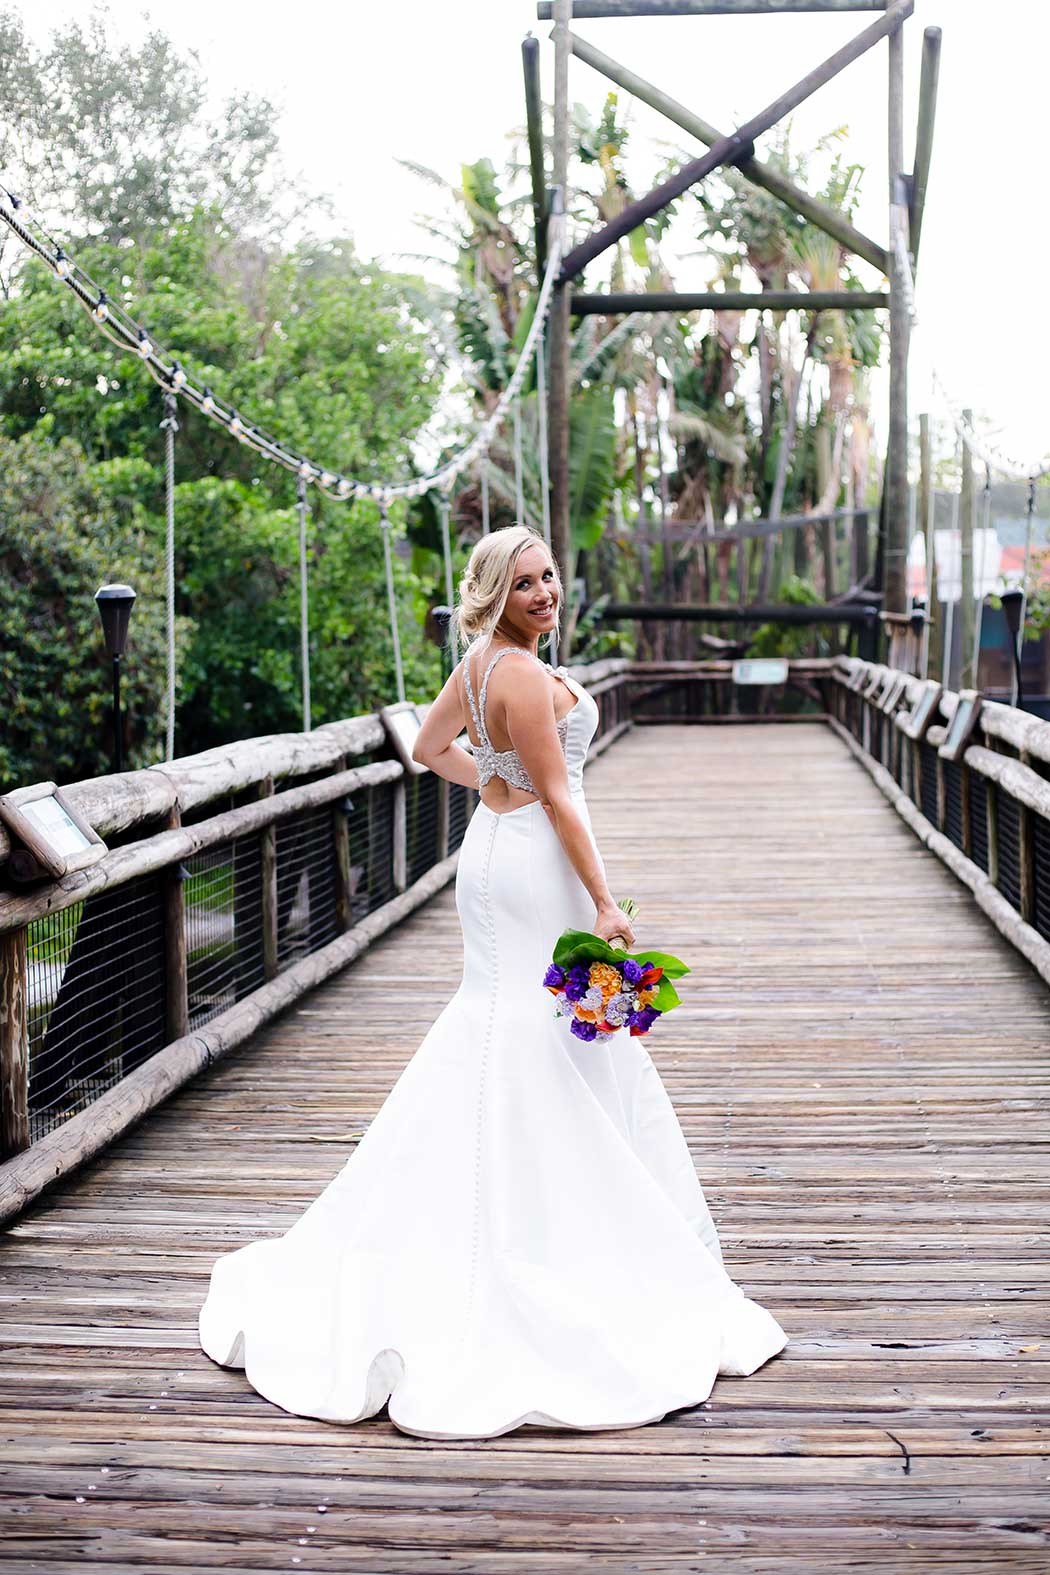 unique posing ideas for bride on wooden bridge | south florida wedding photographer